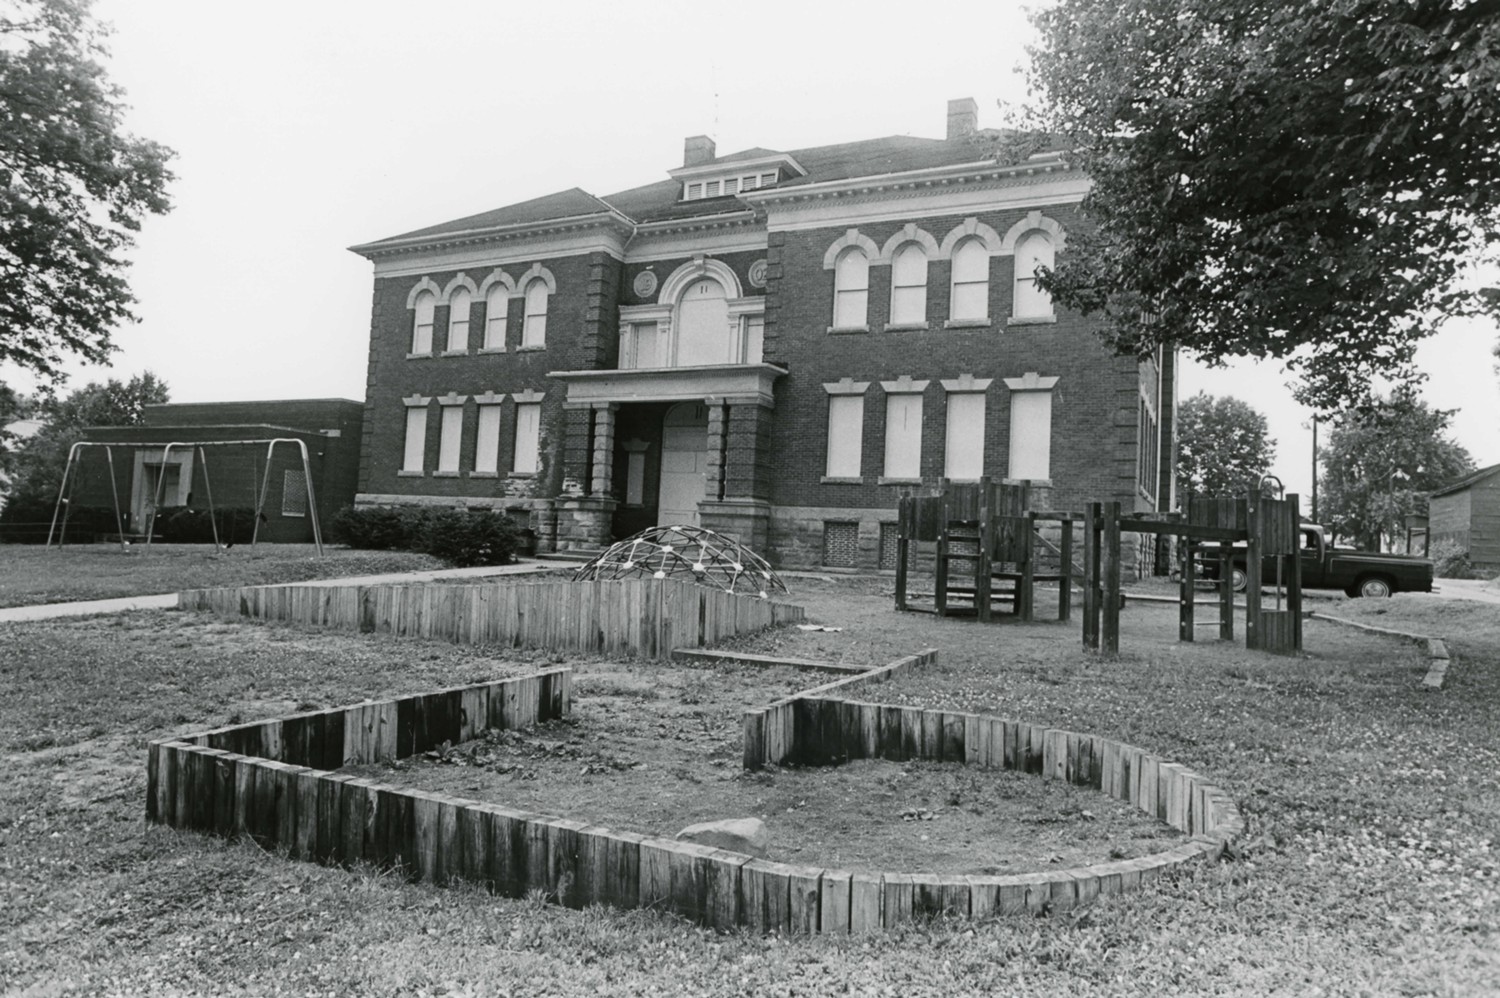 Walnut Street Elementary School, Wooster Ohio Front (Main) Facade (1983)